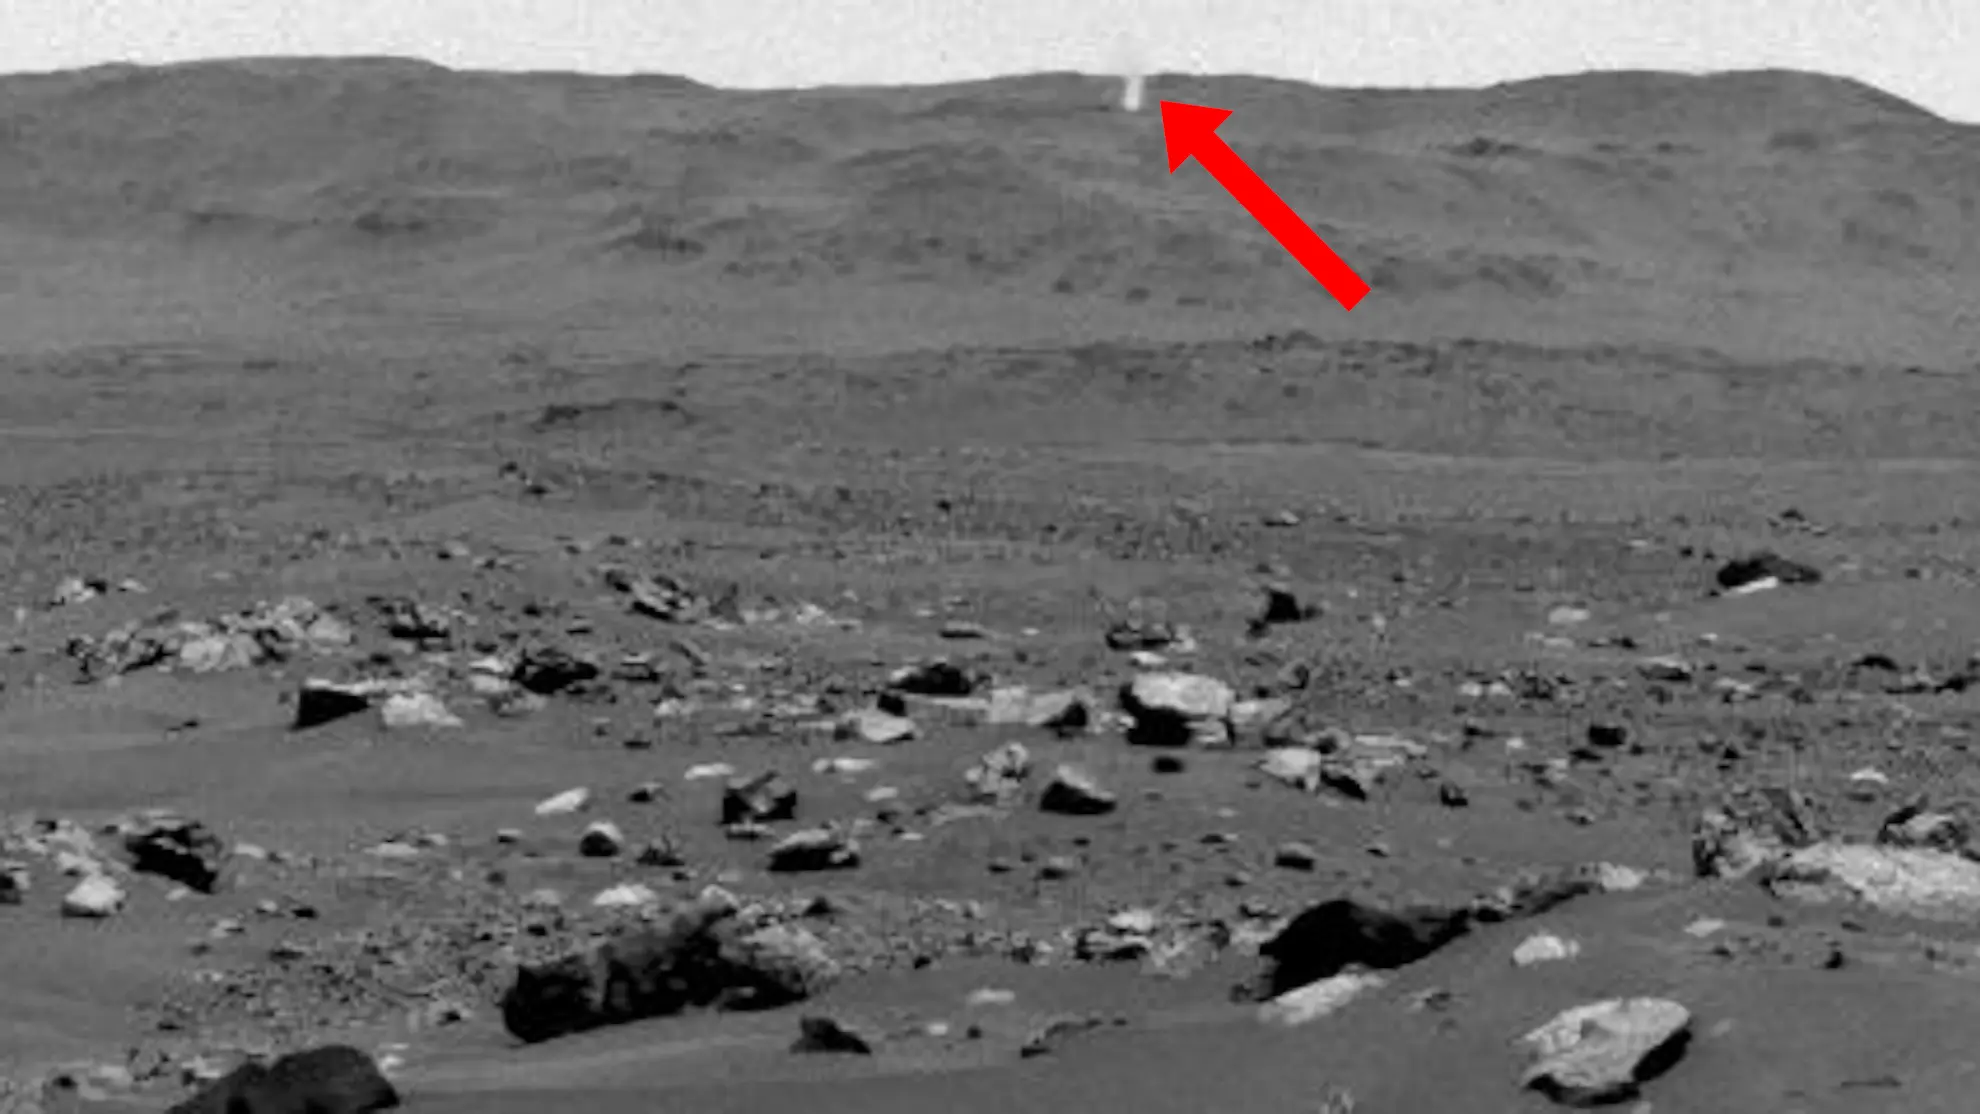 Perseverance spotted an immense 2 kilometre-high dust devil on Mars